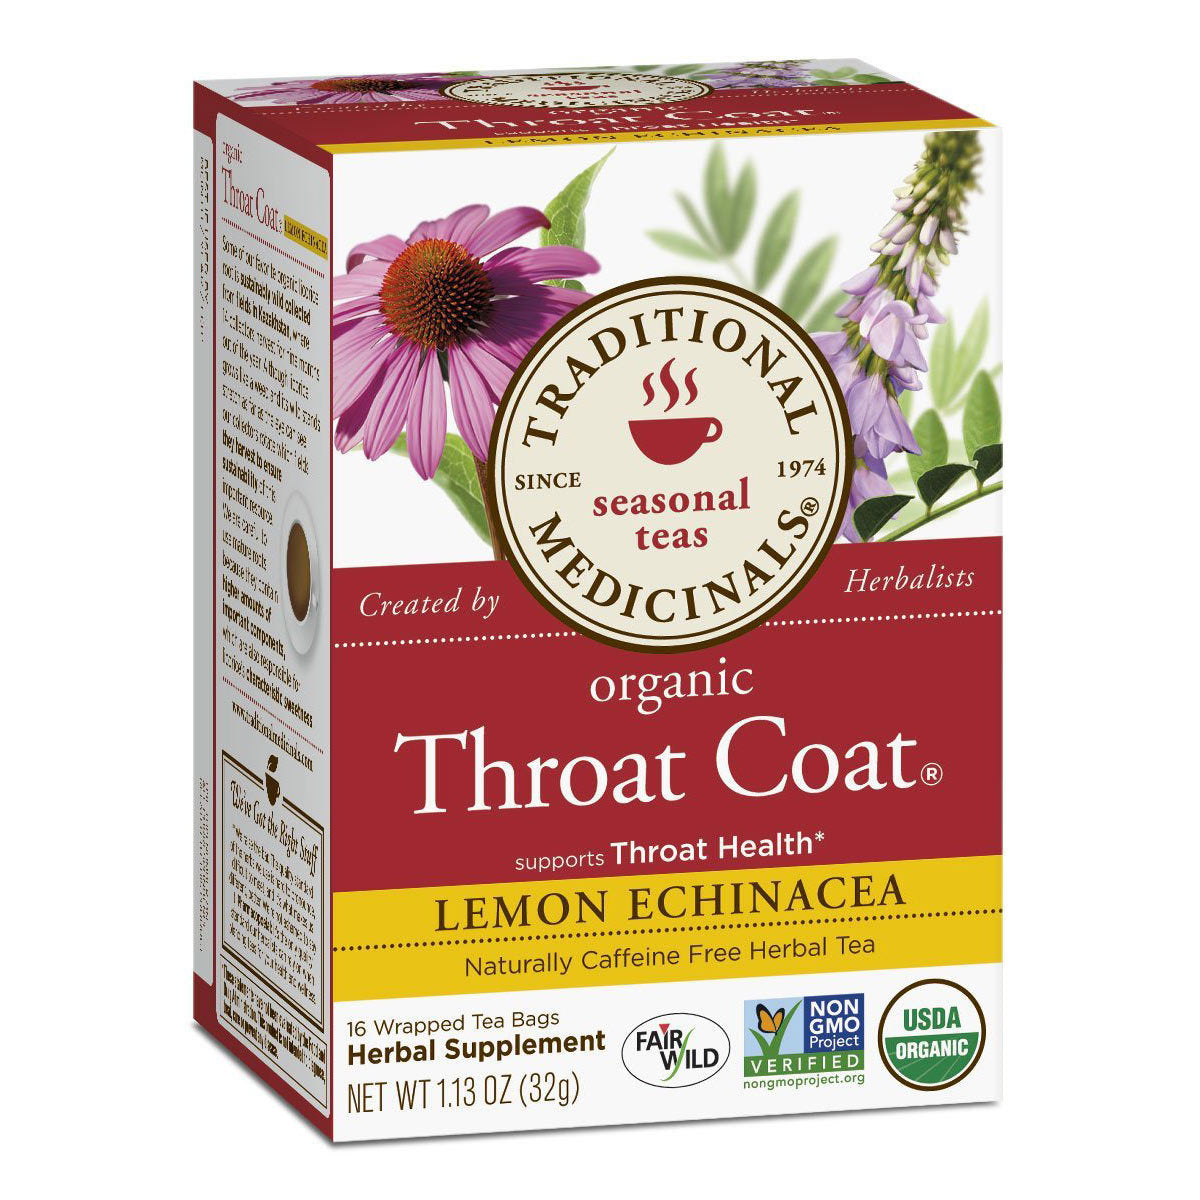 Primary image of Lemon Echinacea Throat Coat